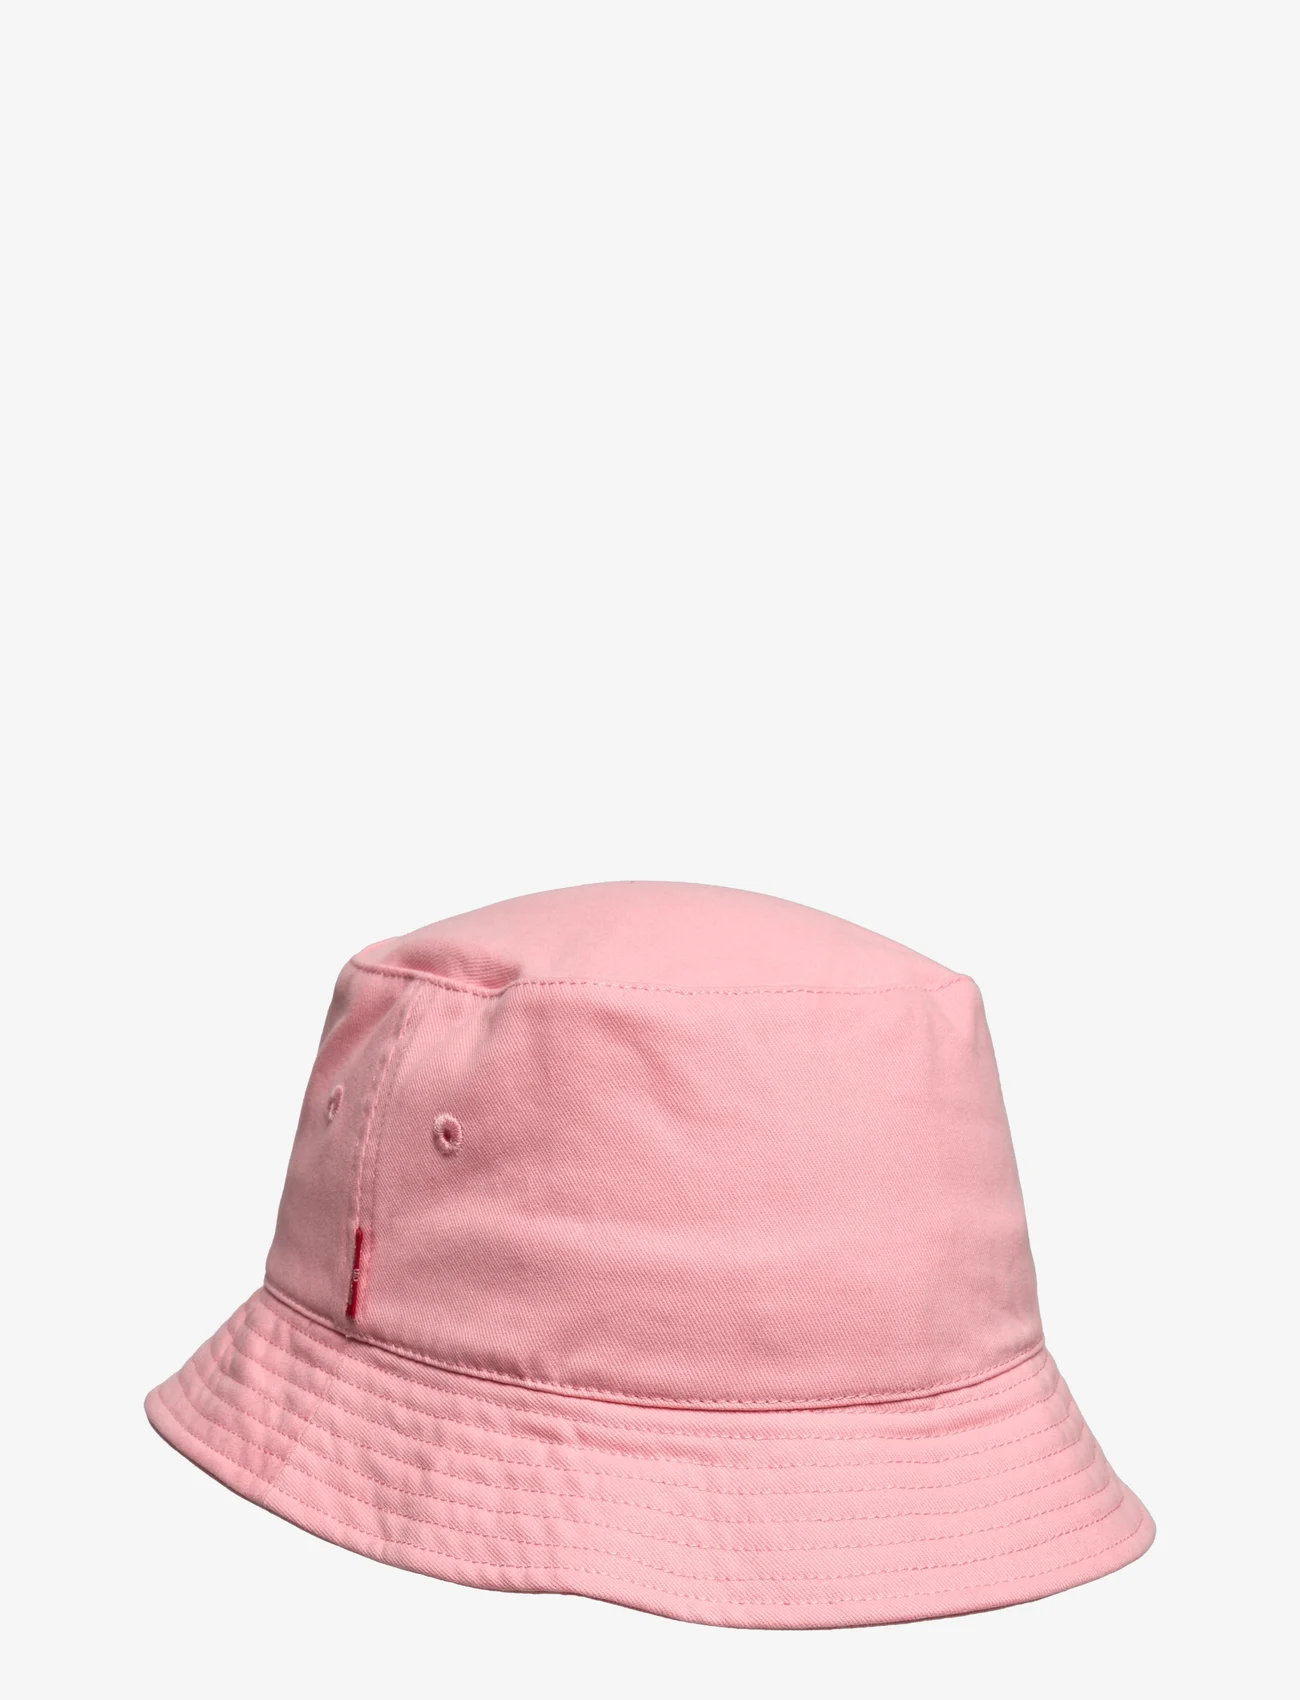 Levi's - Levi's Poster Logo Bucket Hat - summer savings - pink - 1